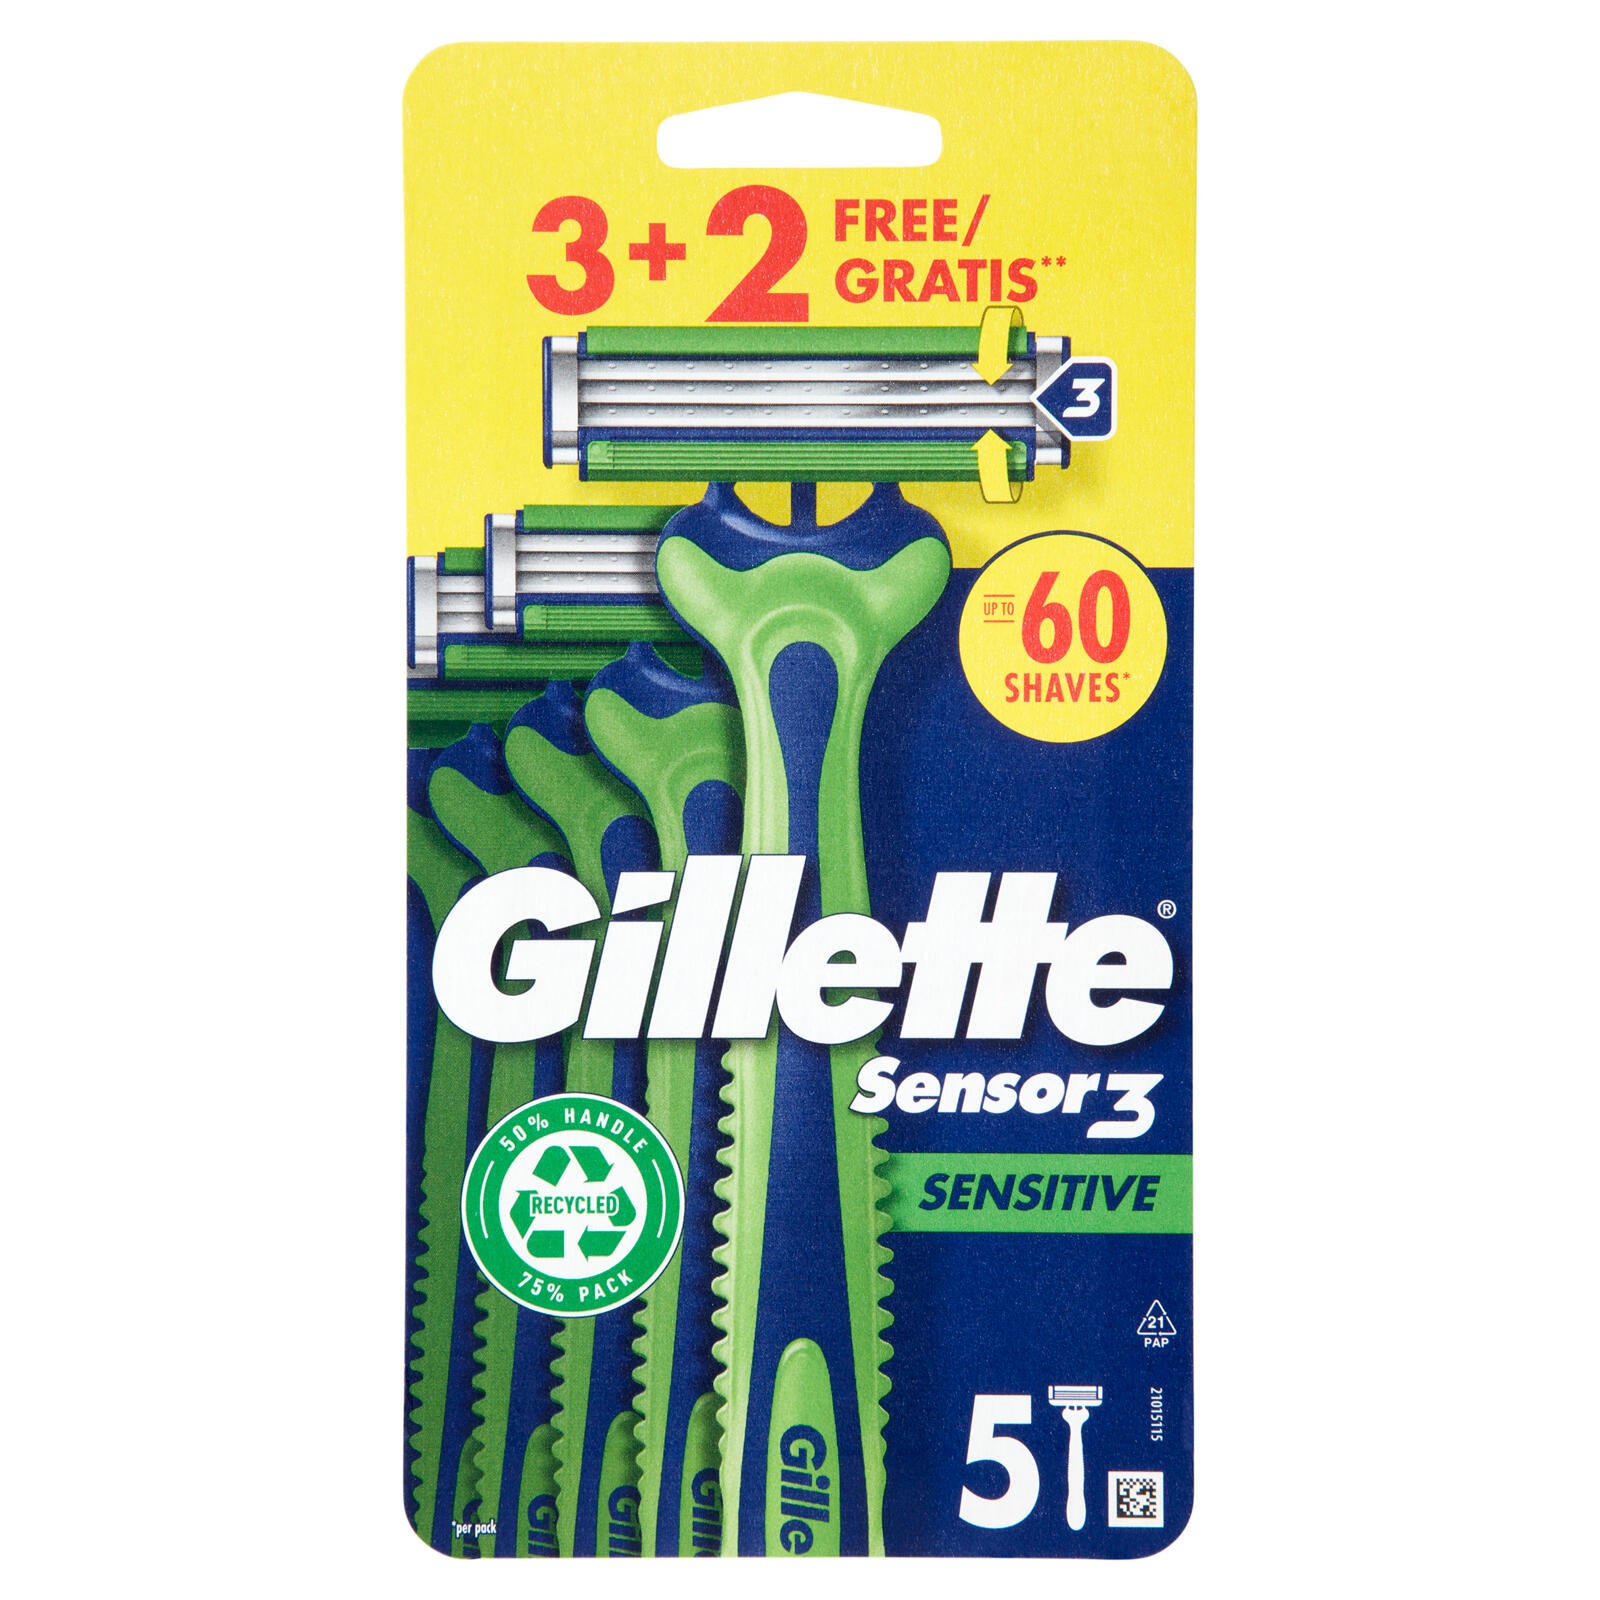 Gillette Sensor 3 Sensitive Rasoio da Uomo Usa e Getta, 3 Rasoi + 2 Gratis